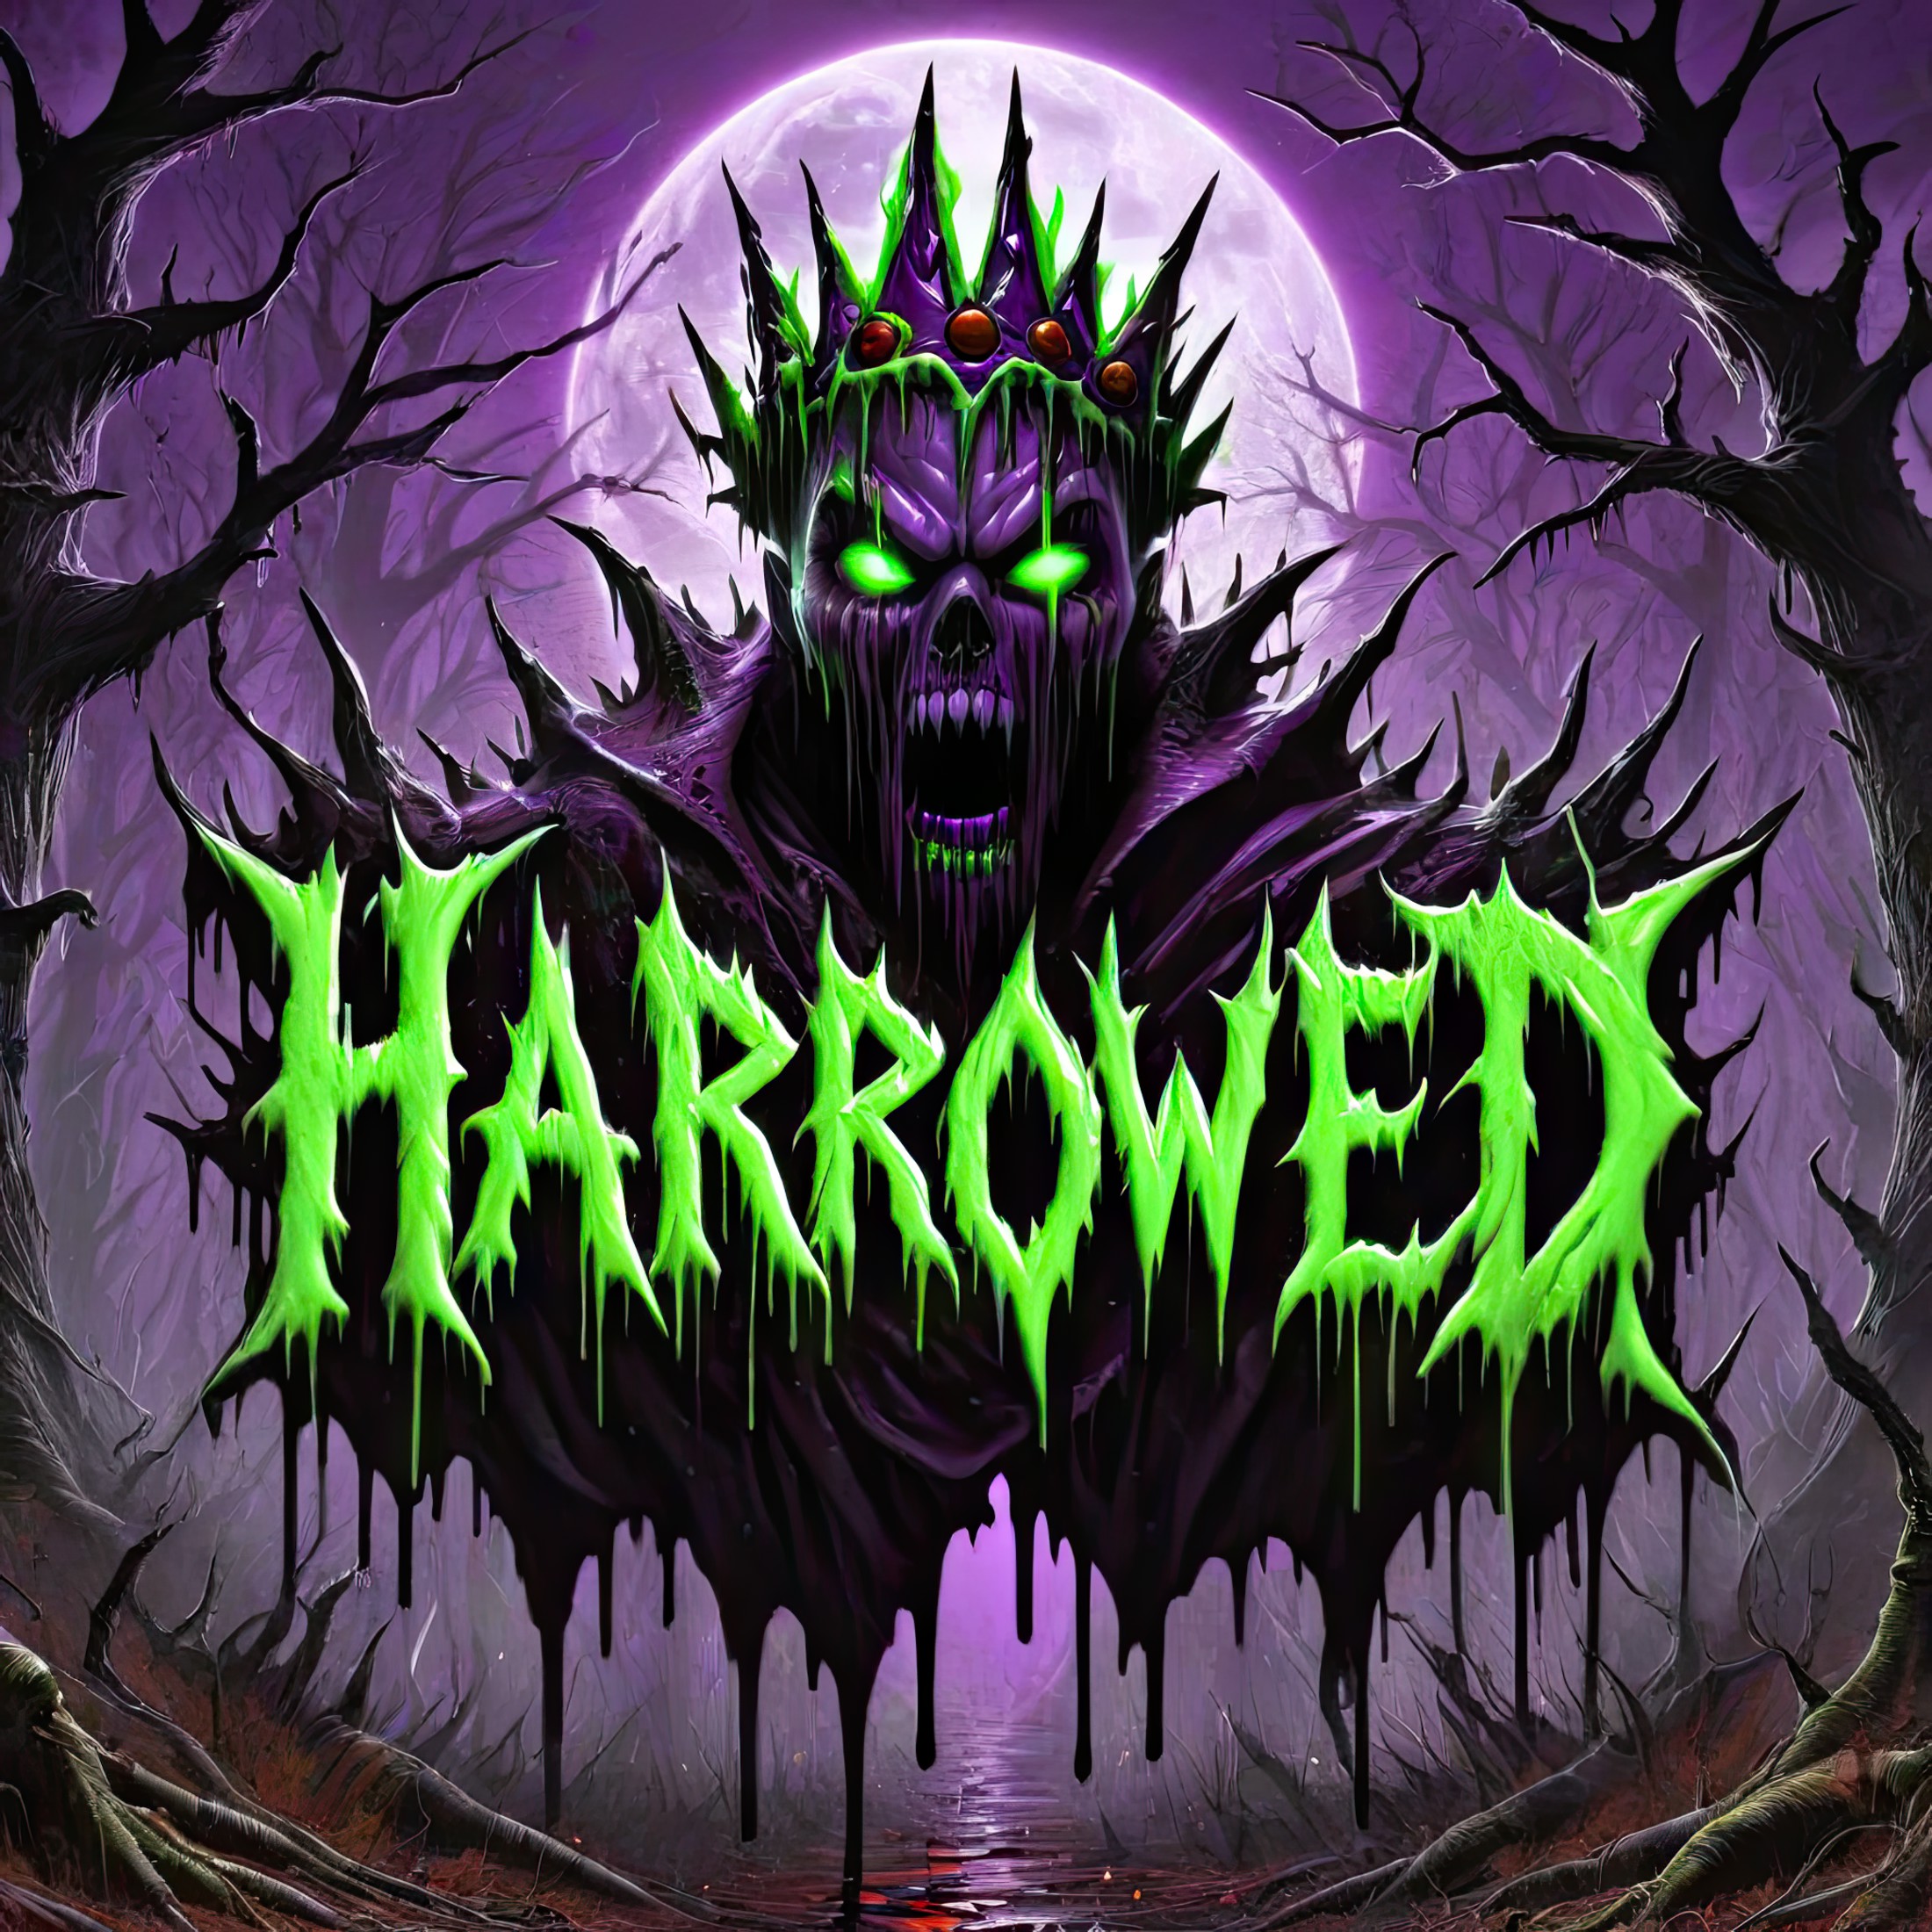 (HarroweD text logo), neon green, purple, spikey, splattered, dripping, blood, crown, fog, moon, trees